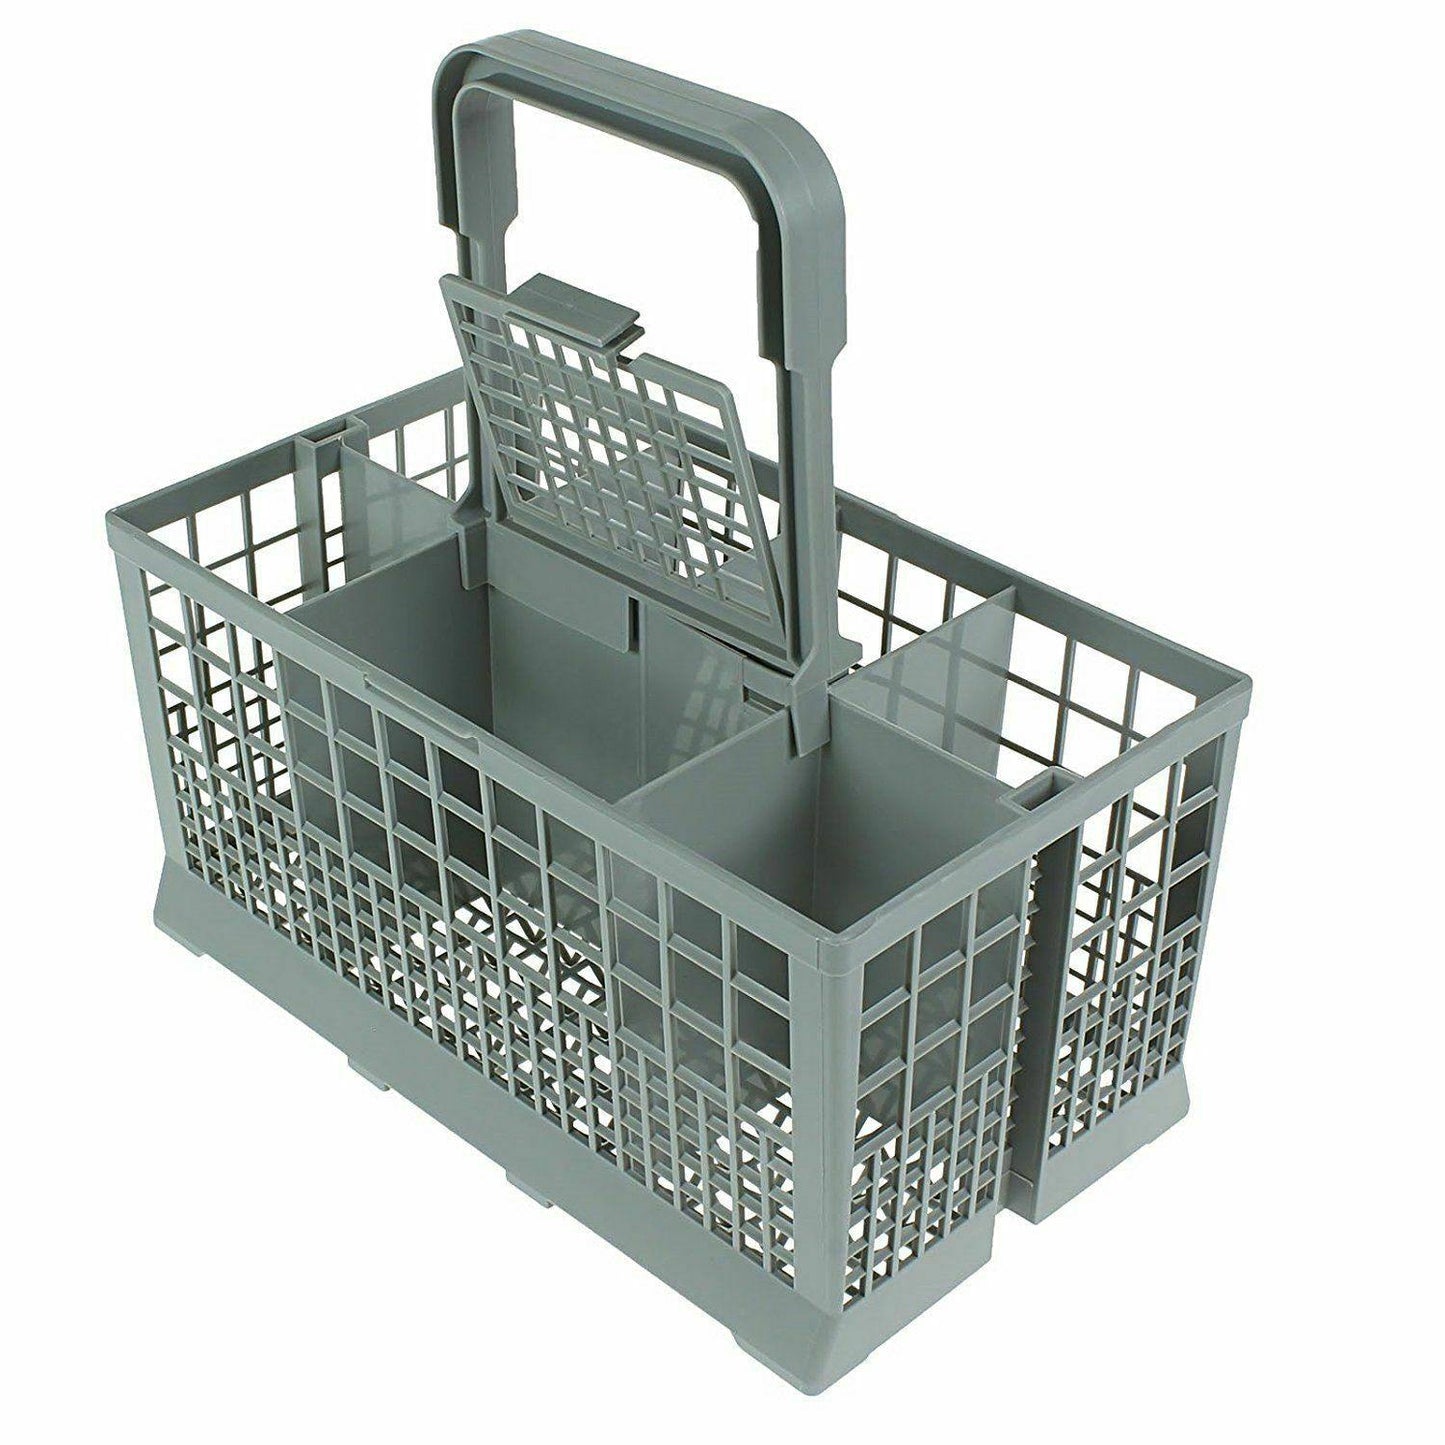 Dishwasher Cutlery Basket 240 x 140 x 120mm for LG Fisher Paykel Bosch Sparesbarn